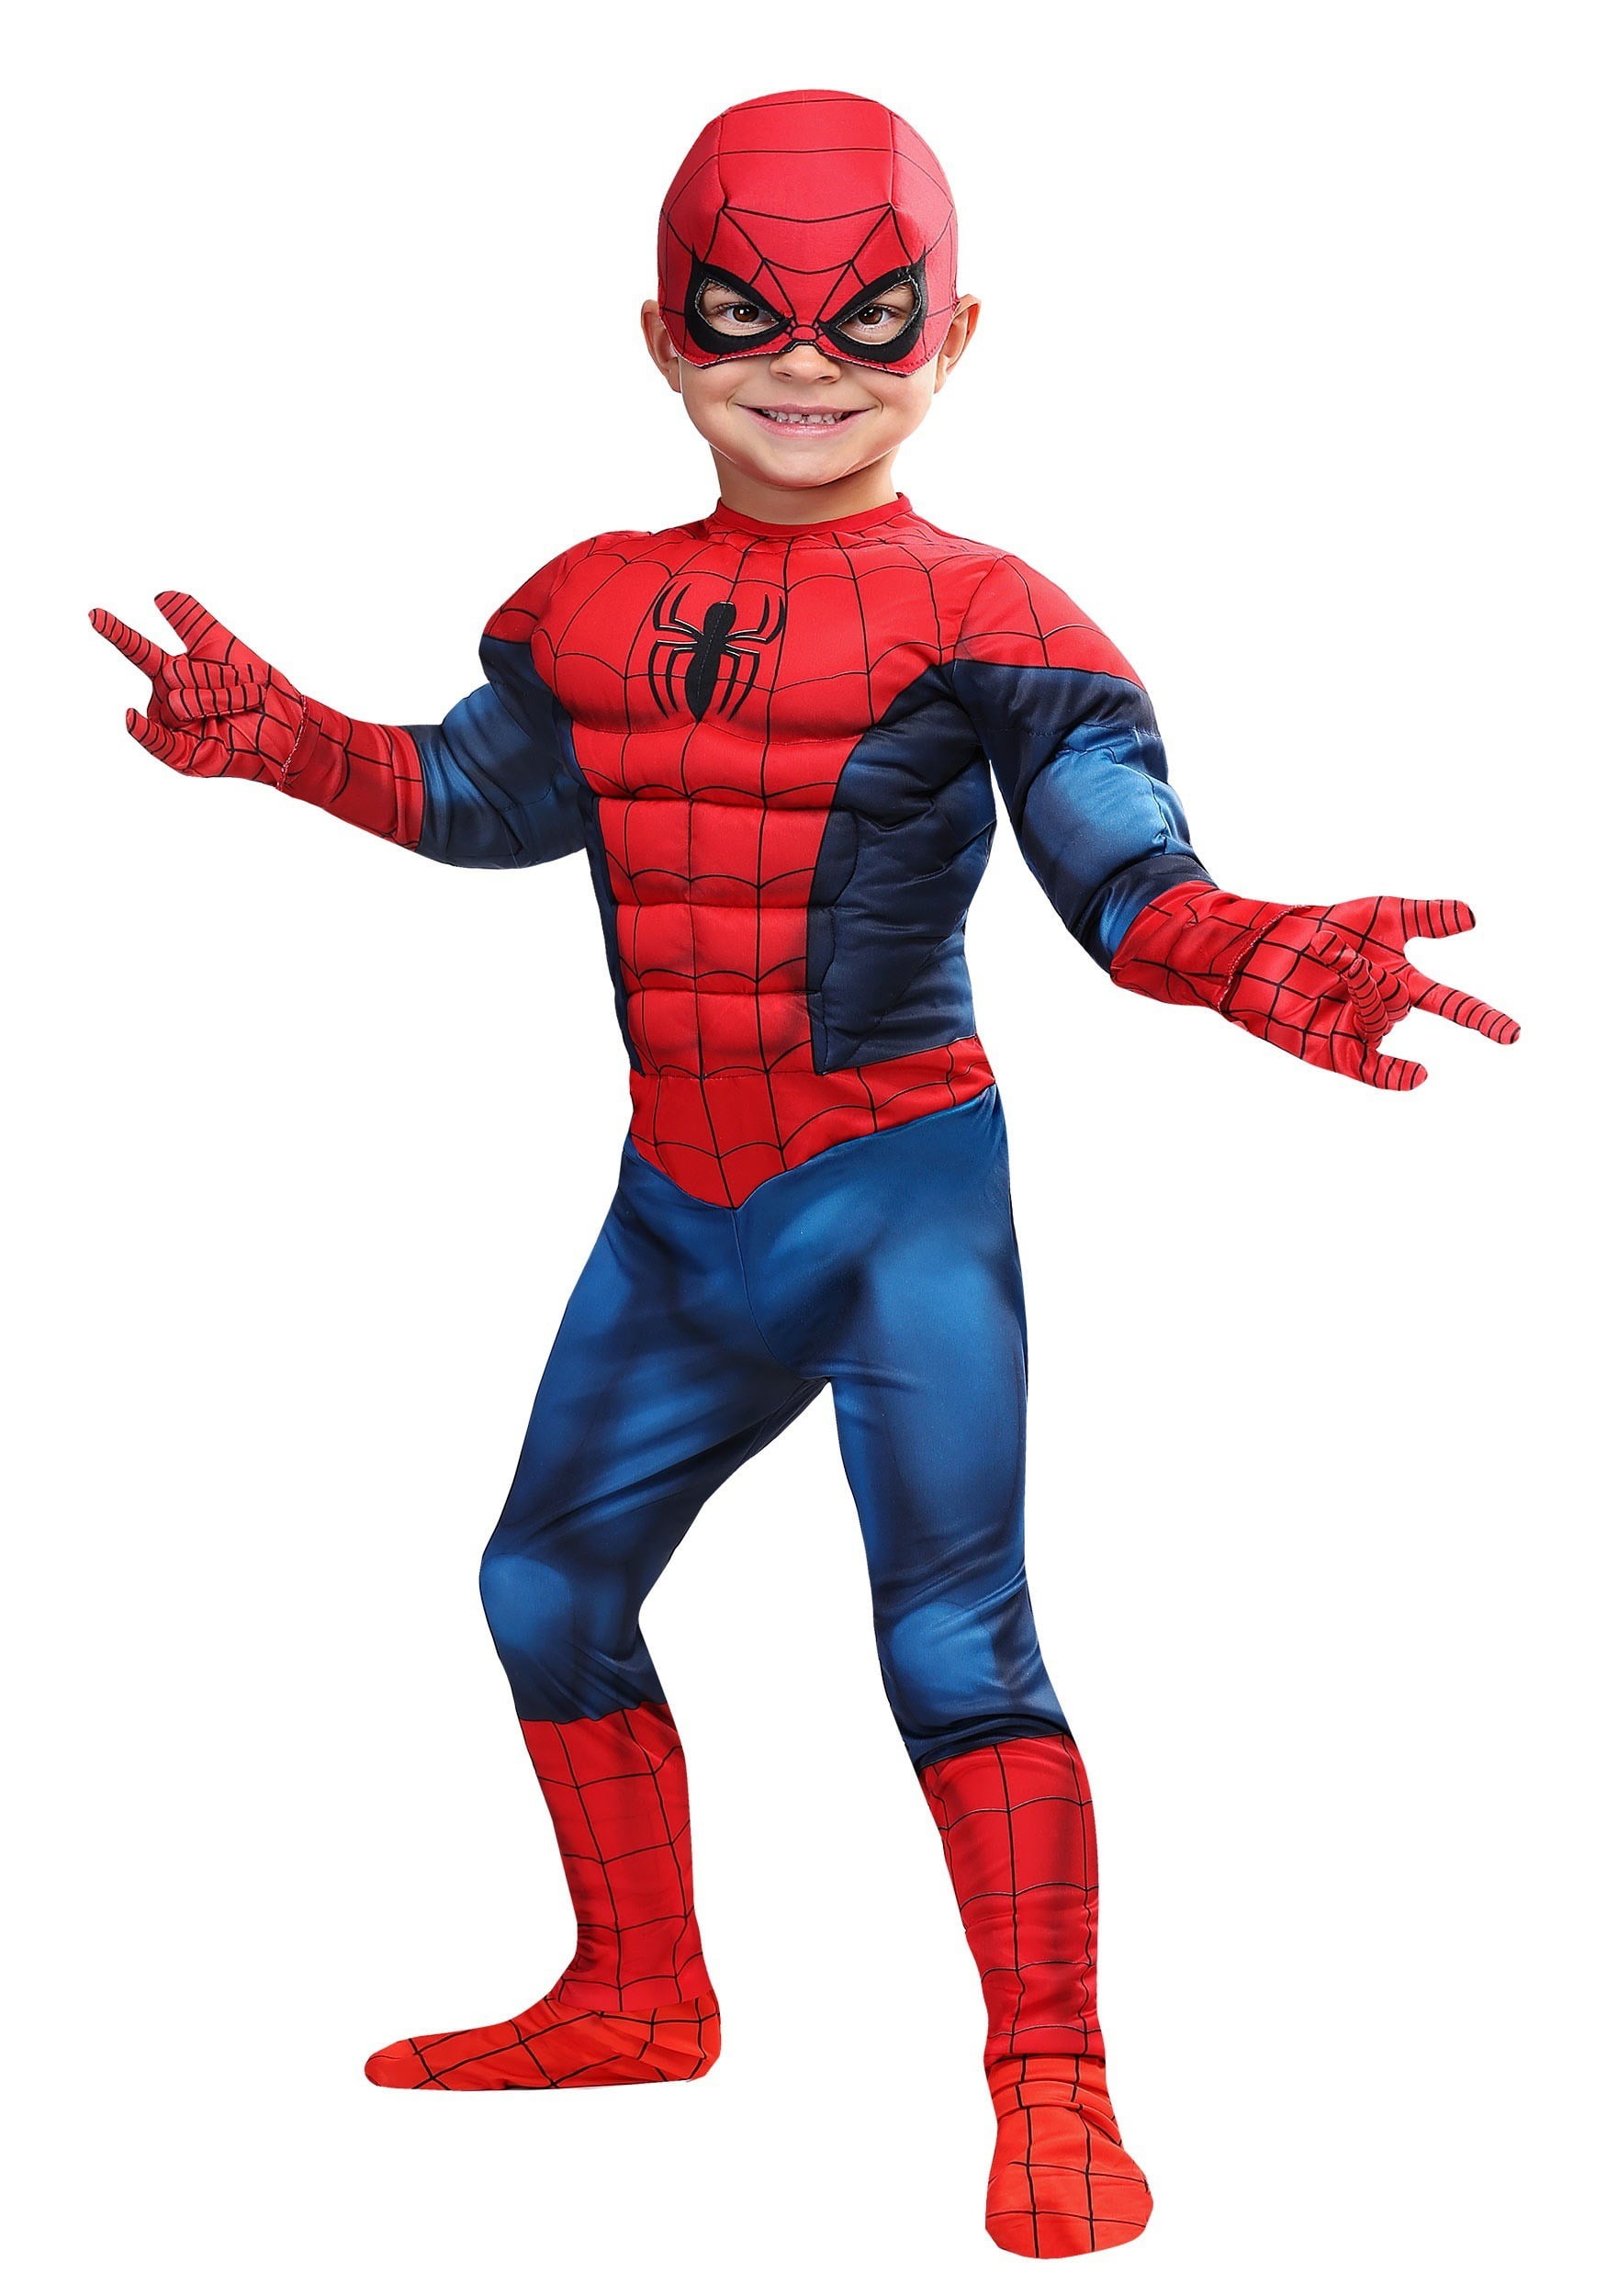 Disney Store Spider-Man Costume For Kids